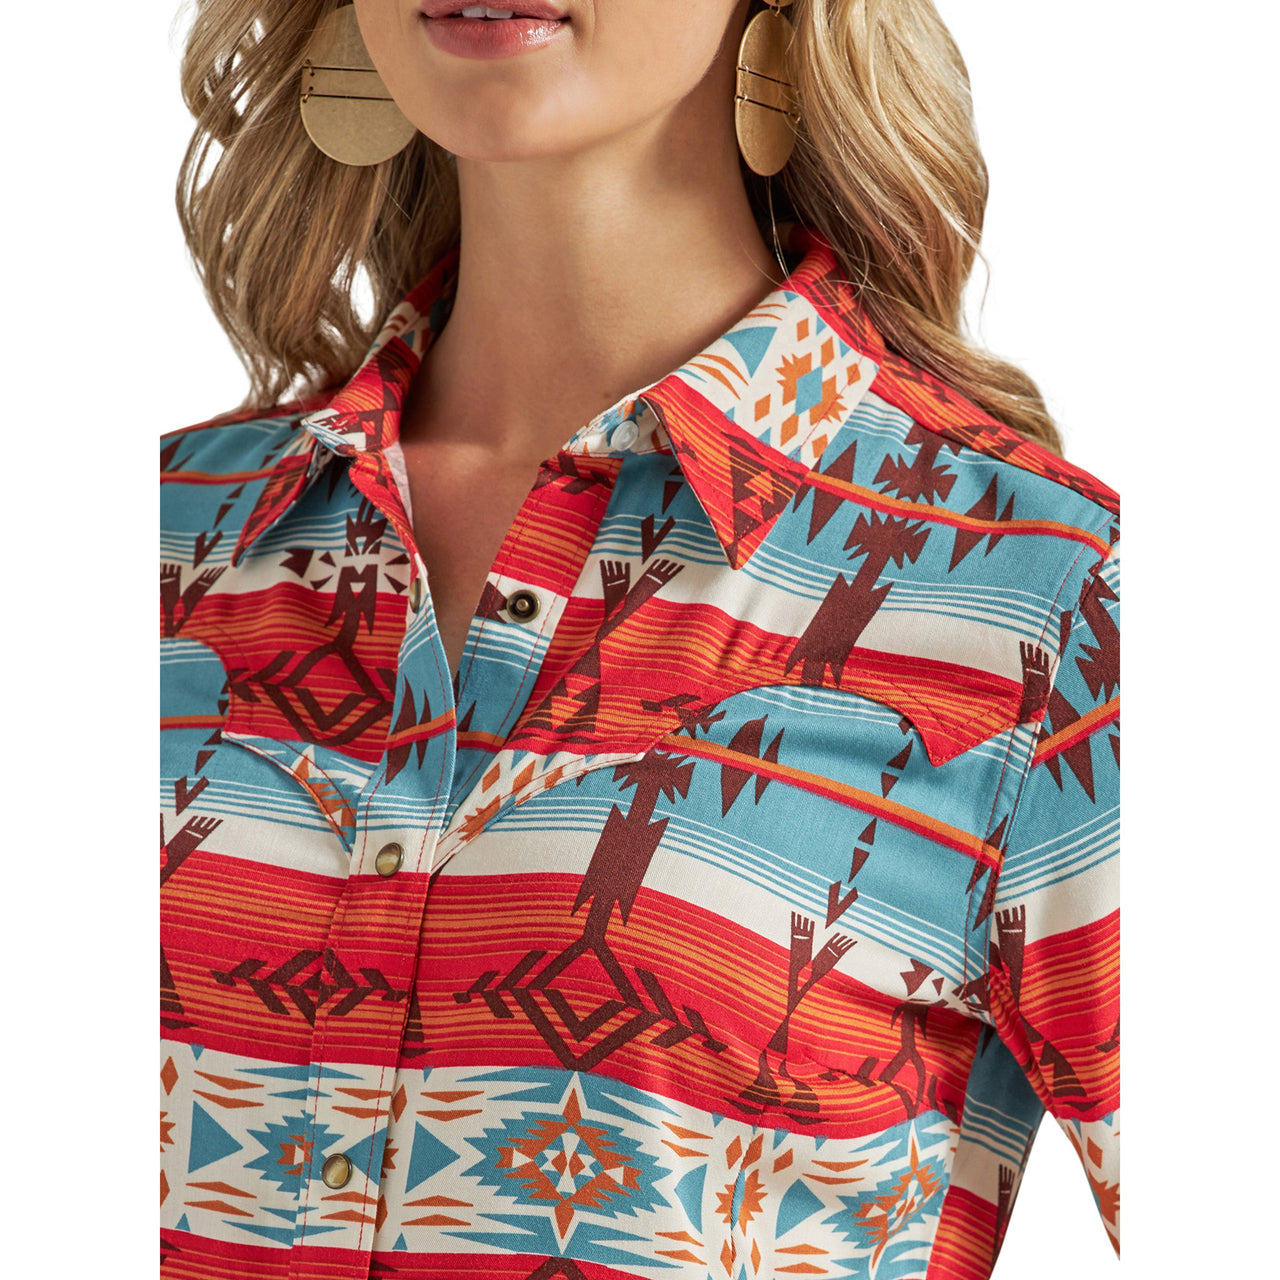 Wrangler Women's Retro Americana Snap Shirt - Multi